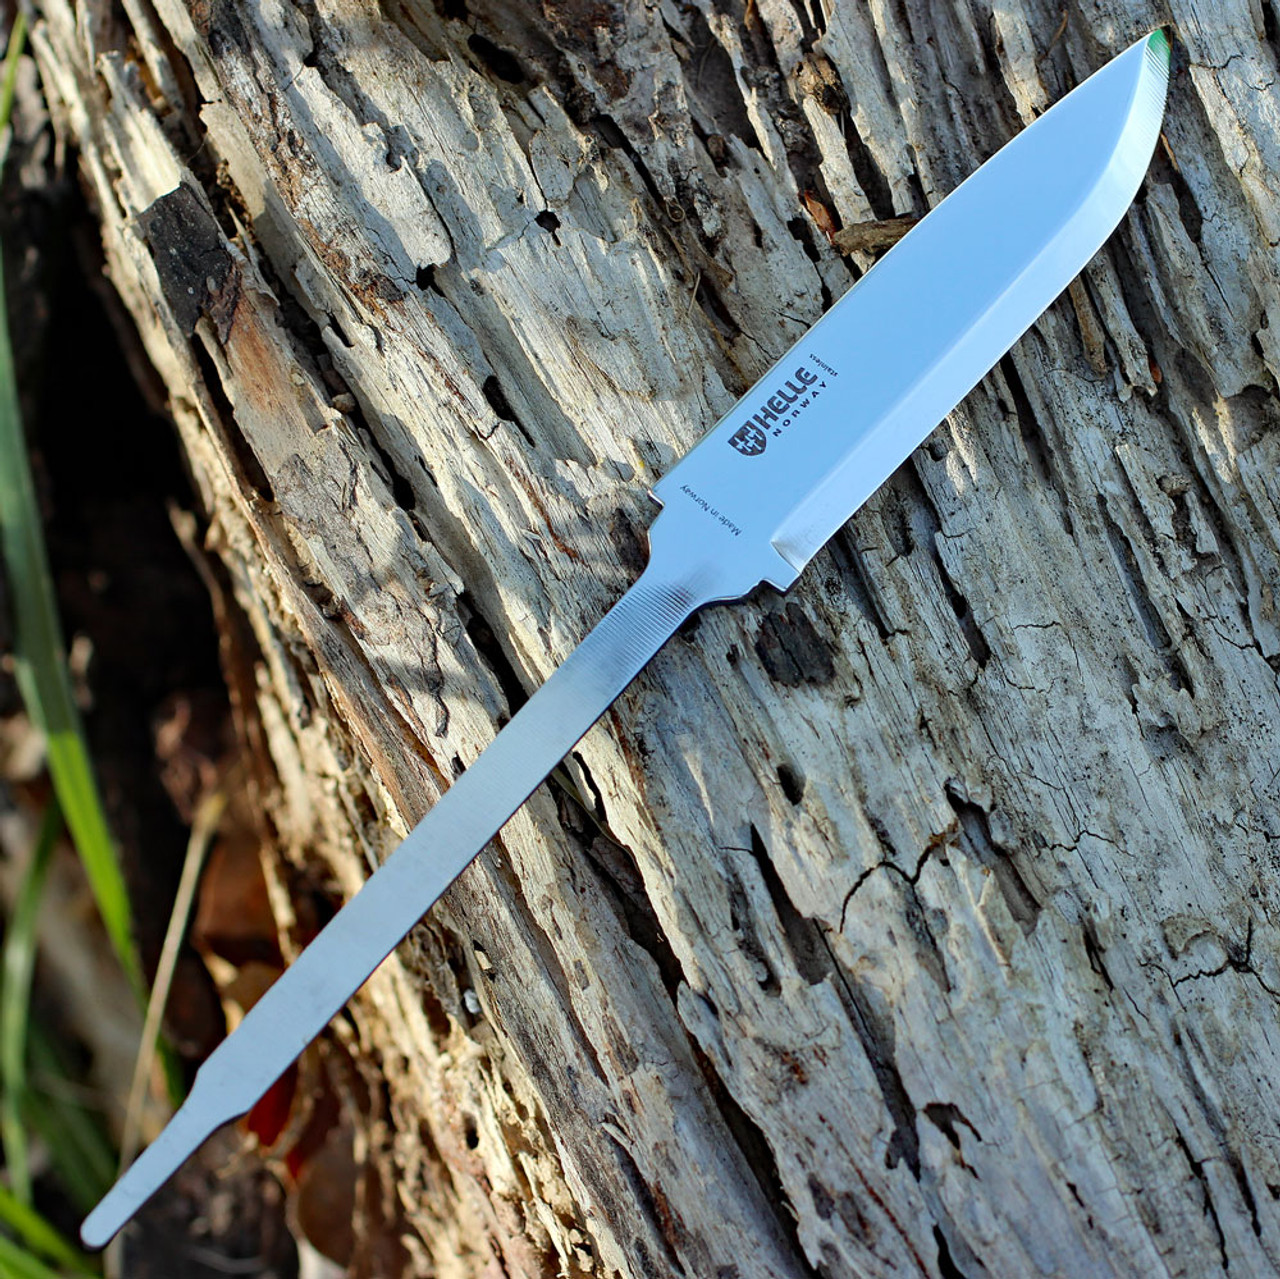 Helle 99BL Harding Knife Making Blade, 4" Triple Laminated Stainless Blade